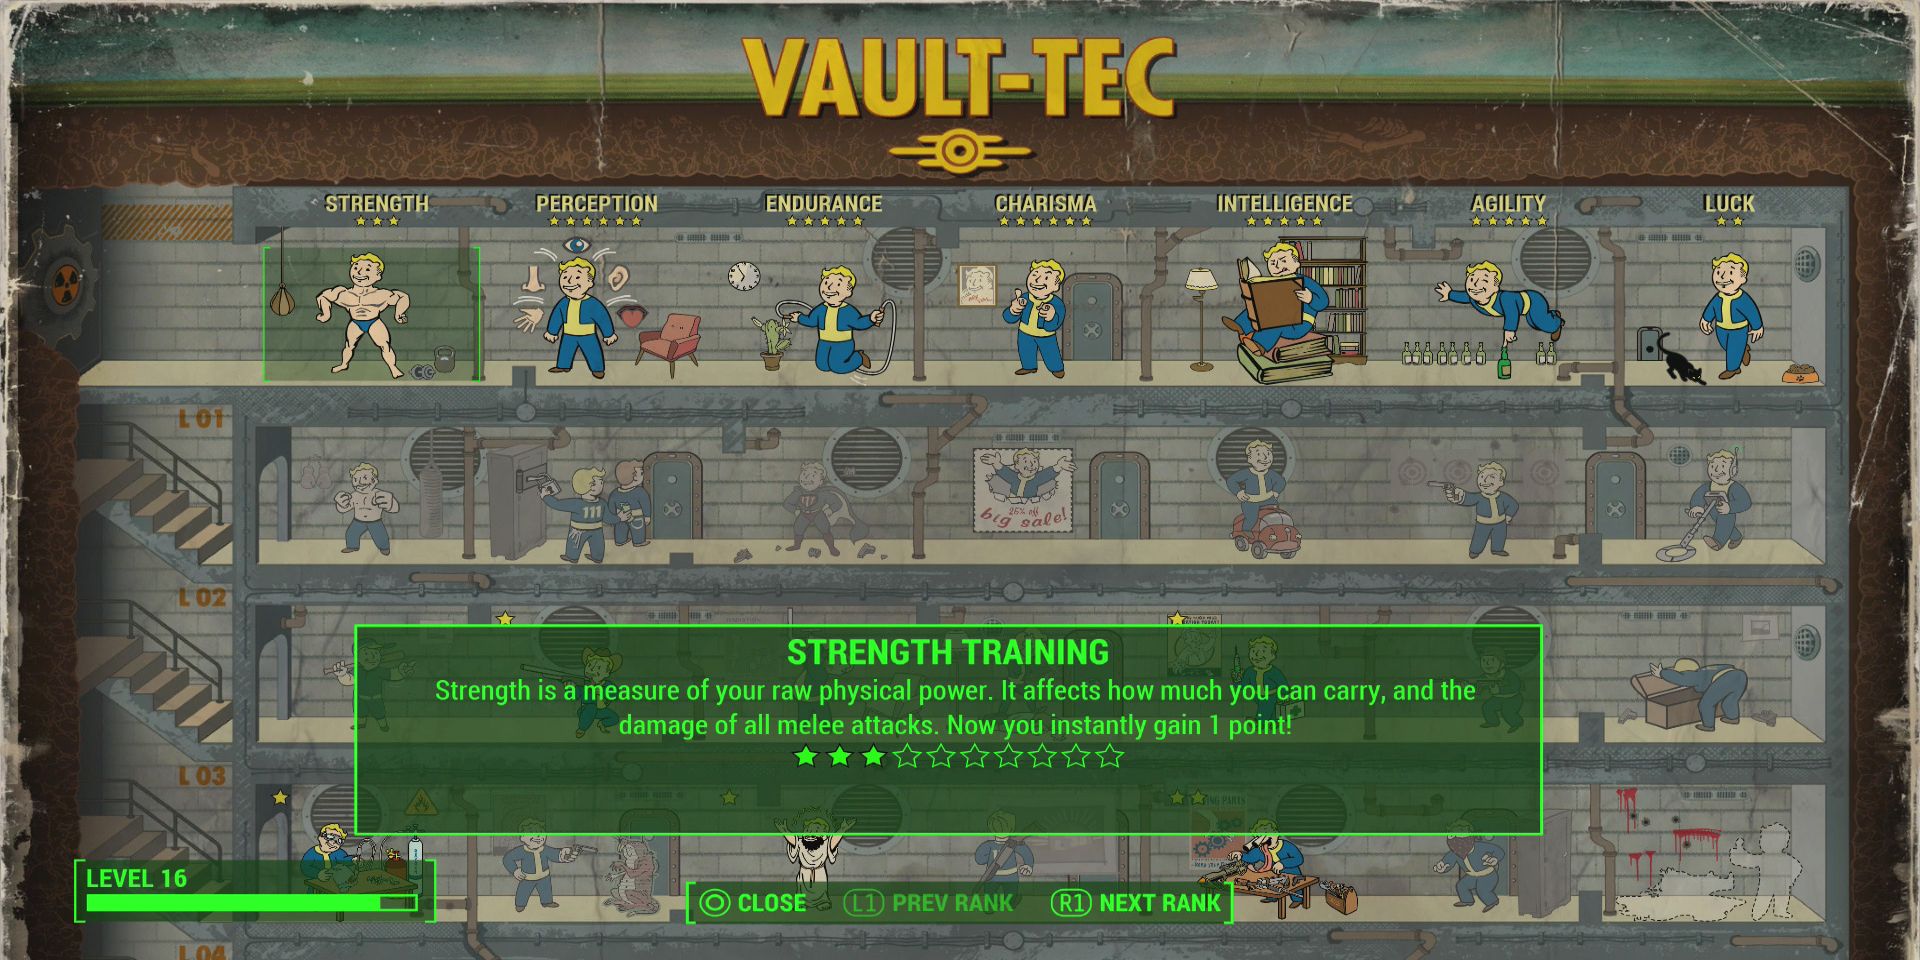 The perk screen in Fallout 4